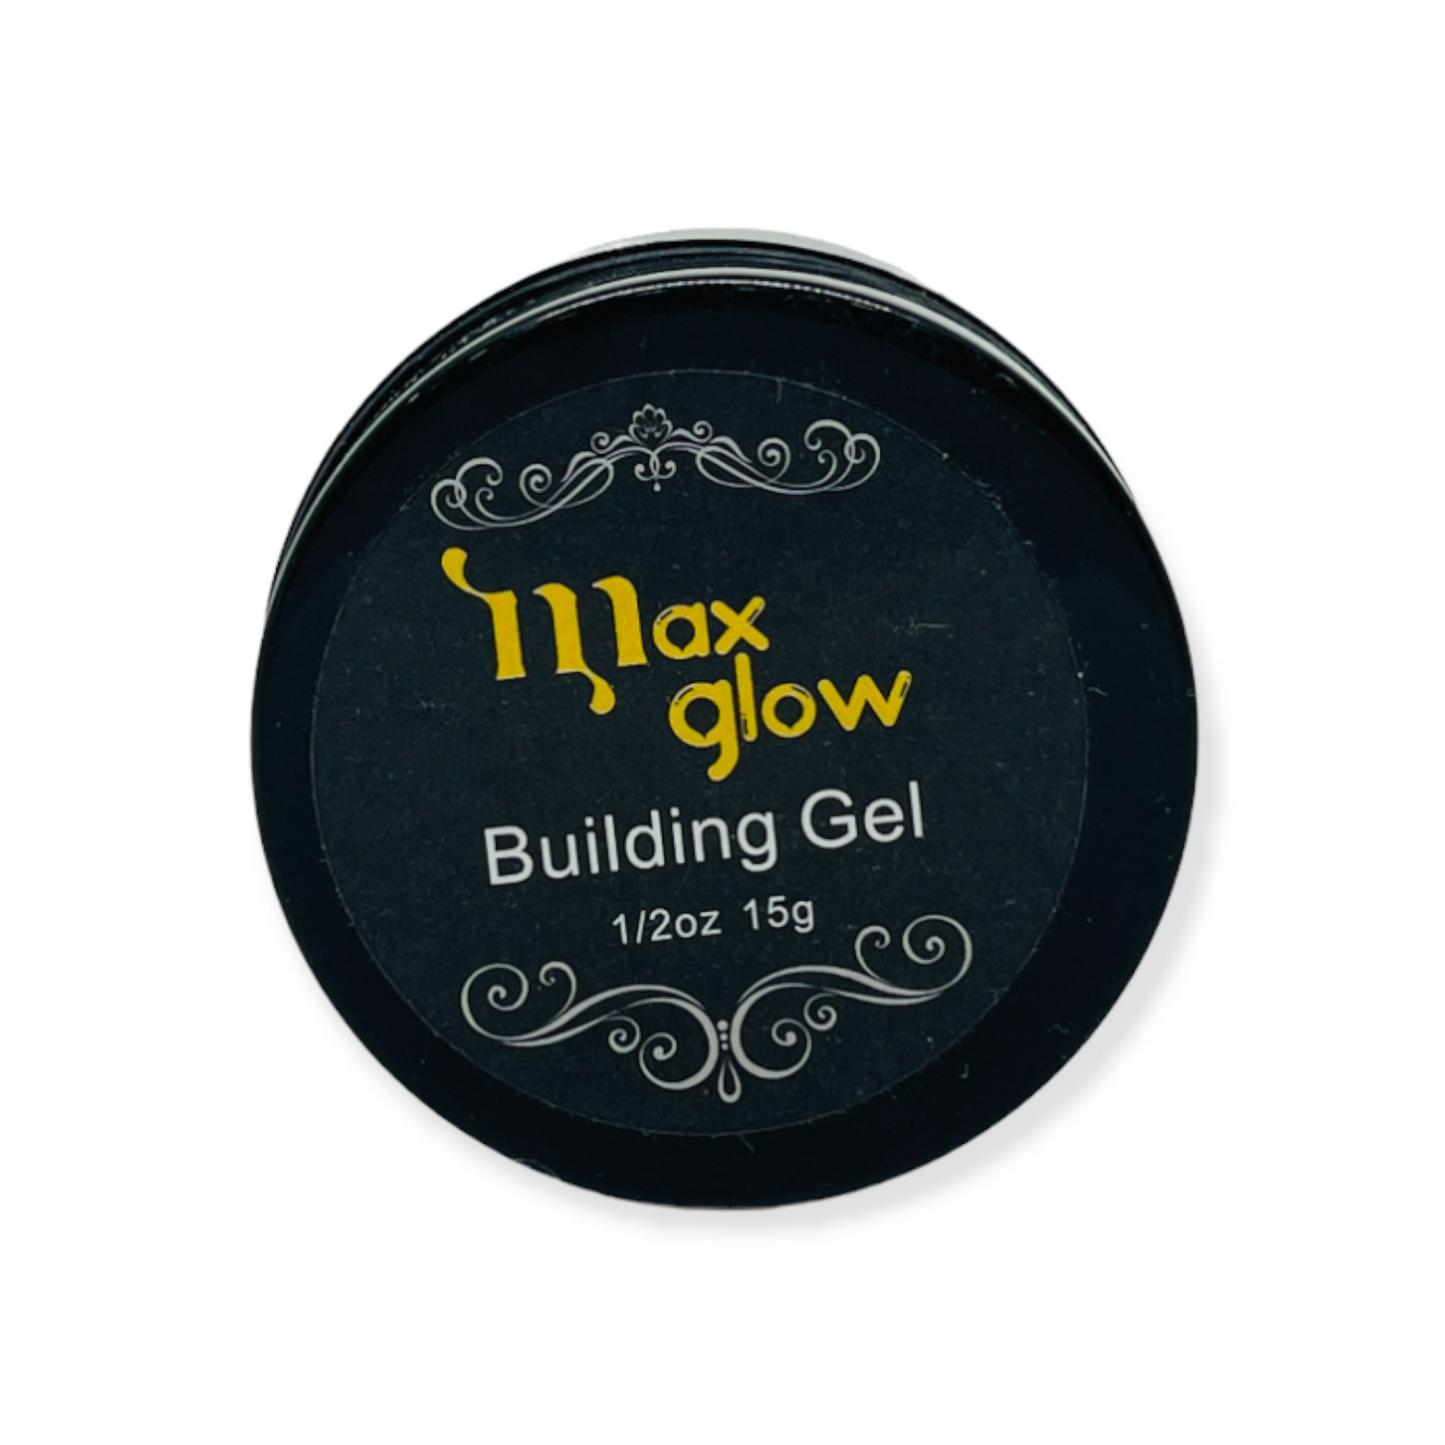 Building Gel MaxGlow